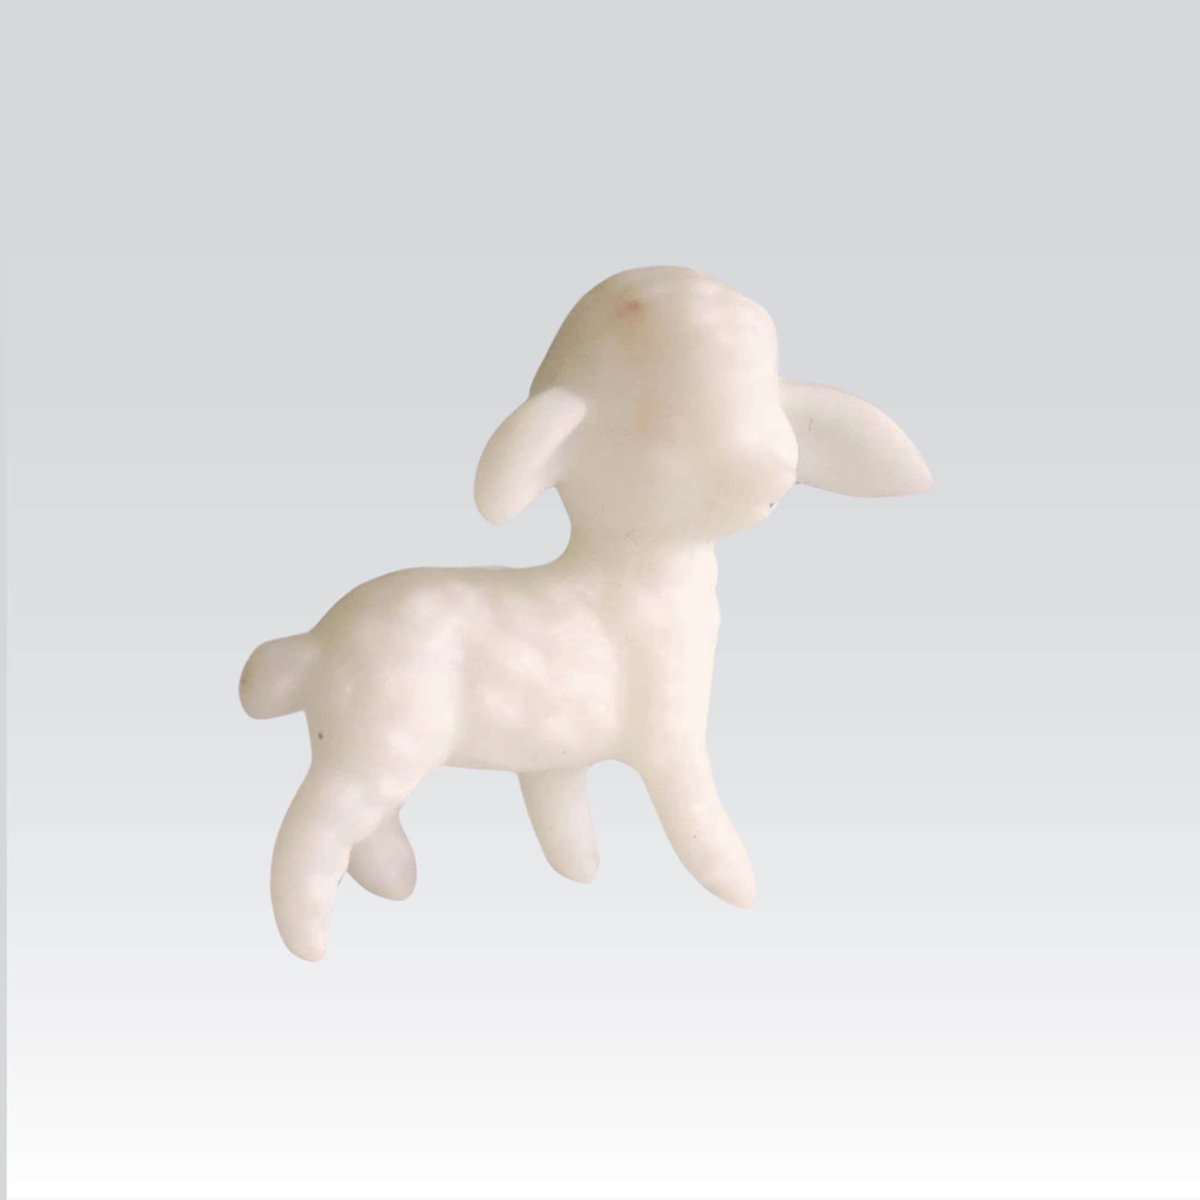 Vintage 1 inch White Plastic Sheep or Lamb, Miniature Figure tuppu.net/e8d93642 #SwirlingOrange11 #Etsy